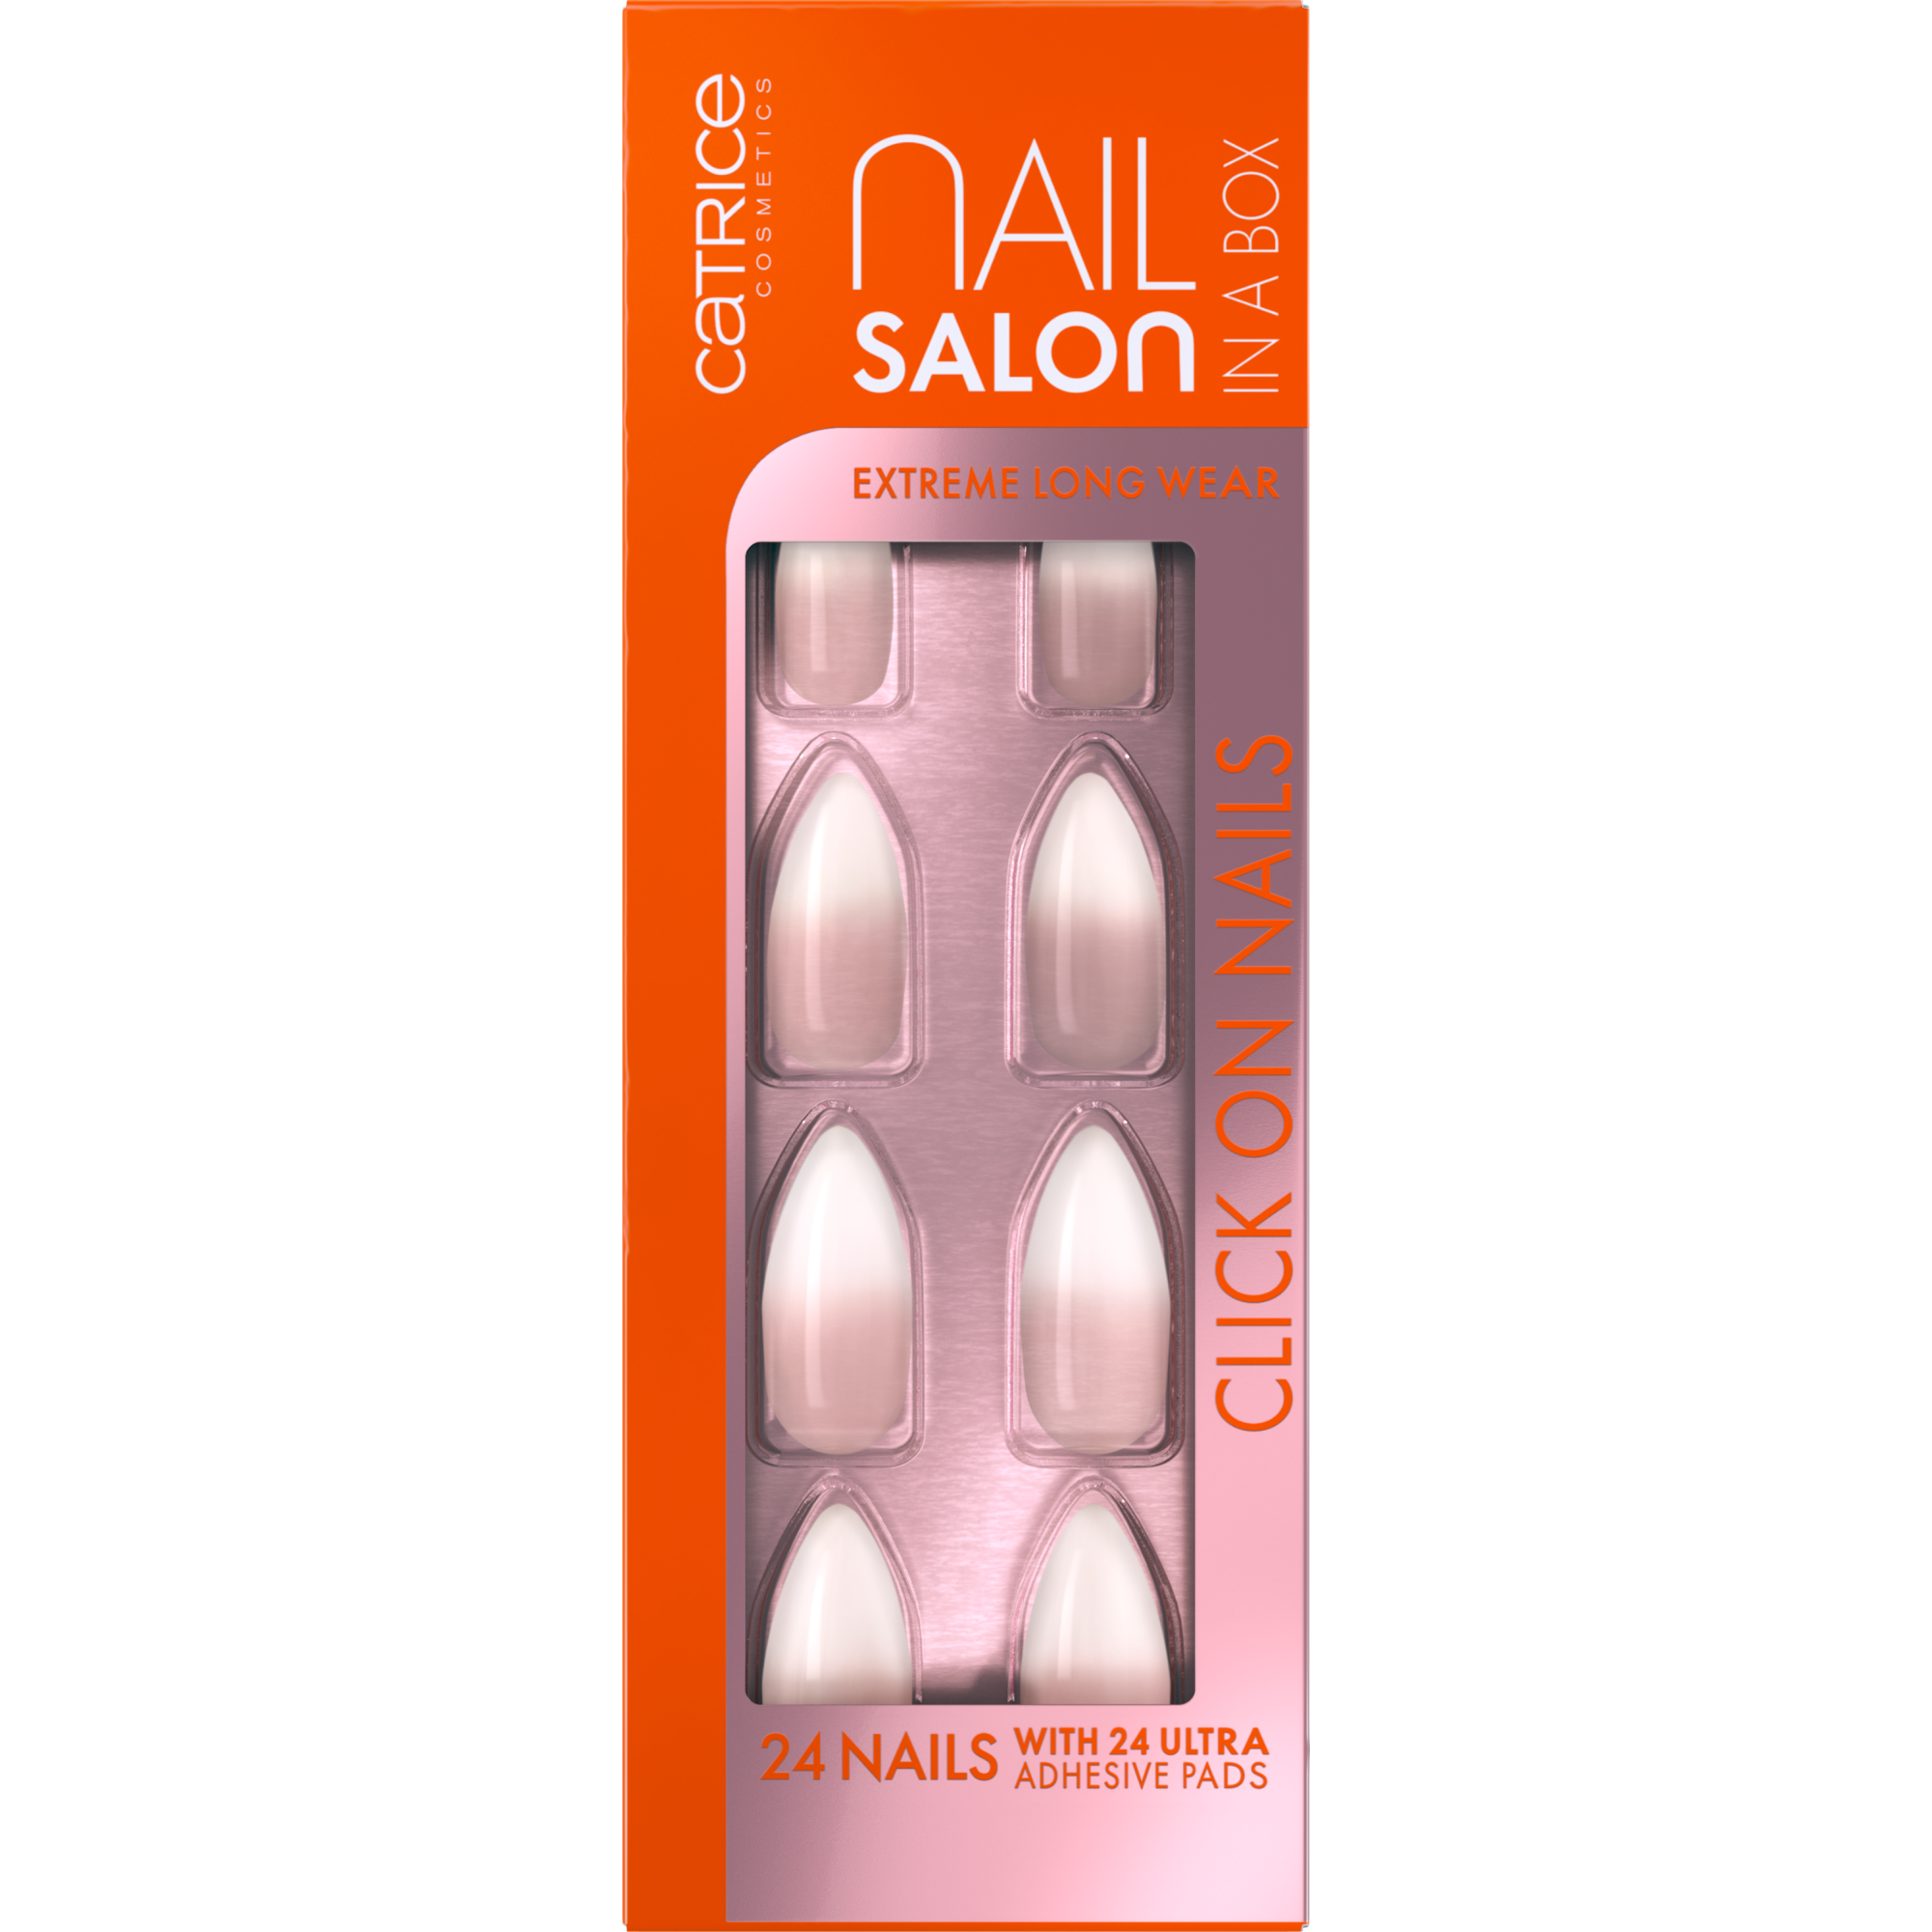 Click on Nails Nail Salon In a Box